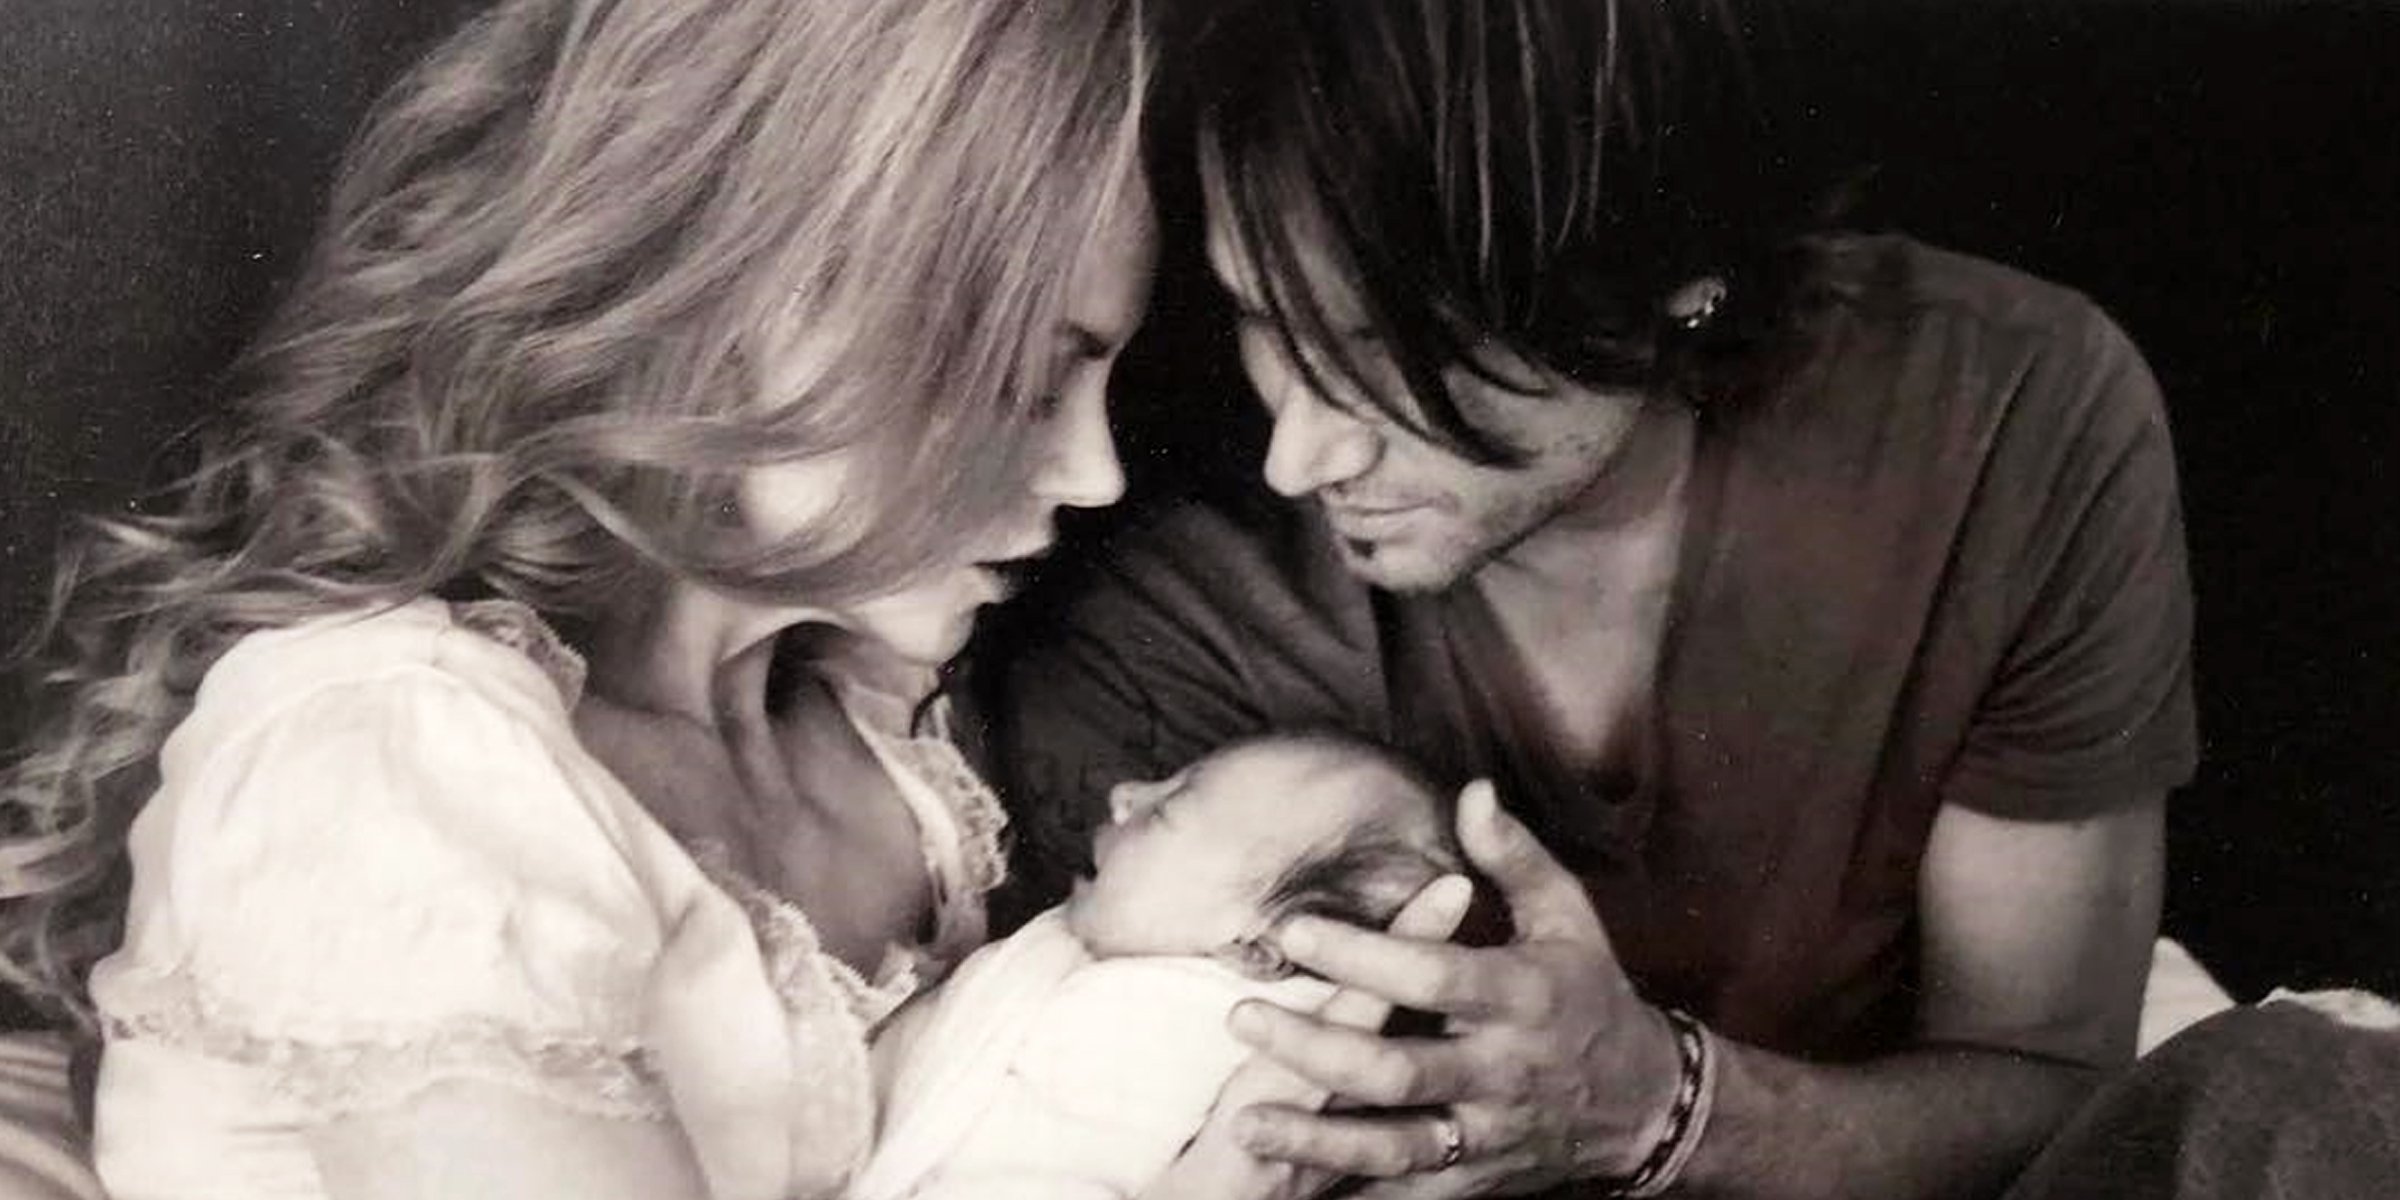 Nicole Kidman and Keith Urban with one of their daughters. | Source: Instagram/nicolekidman